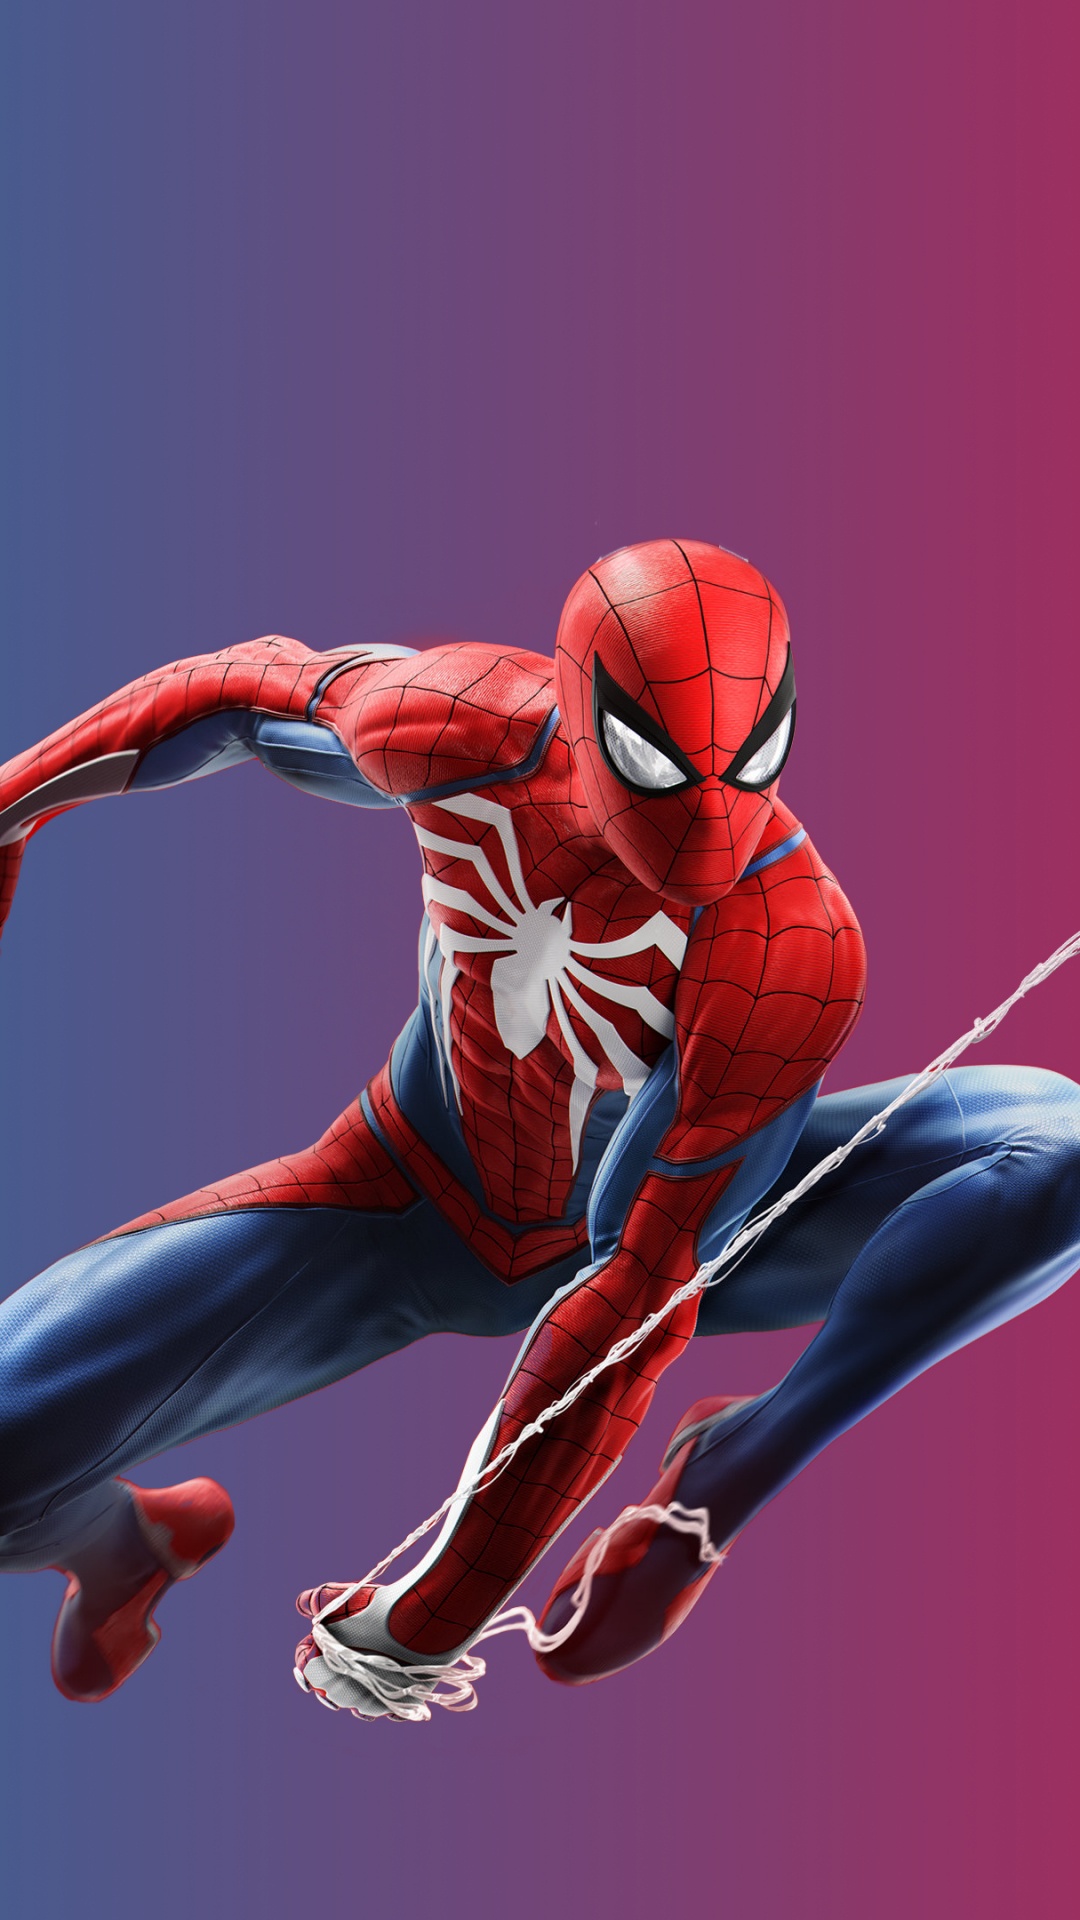 Спайдер про. Человек паук плейстейшен 4. PLAYSTATION 4 Pro человек паук. Человек паук картинки. Человек паук на Нинтендо свитч.